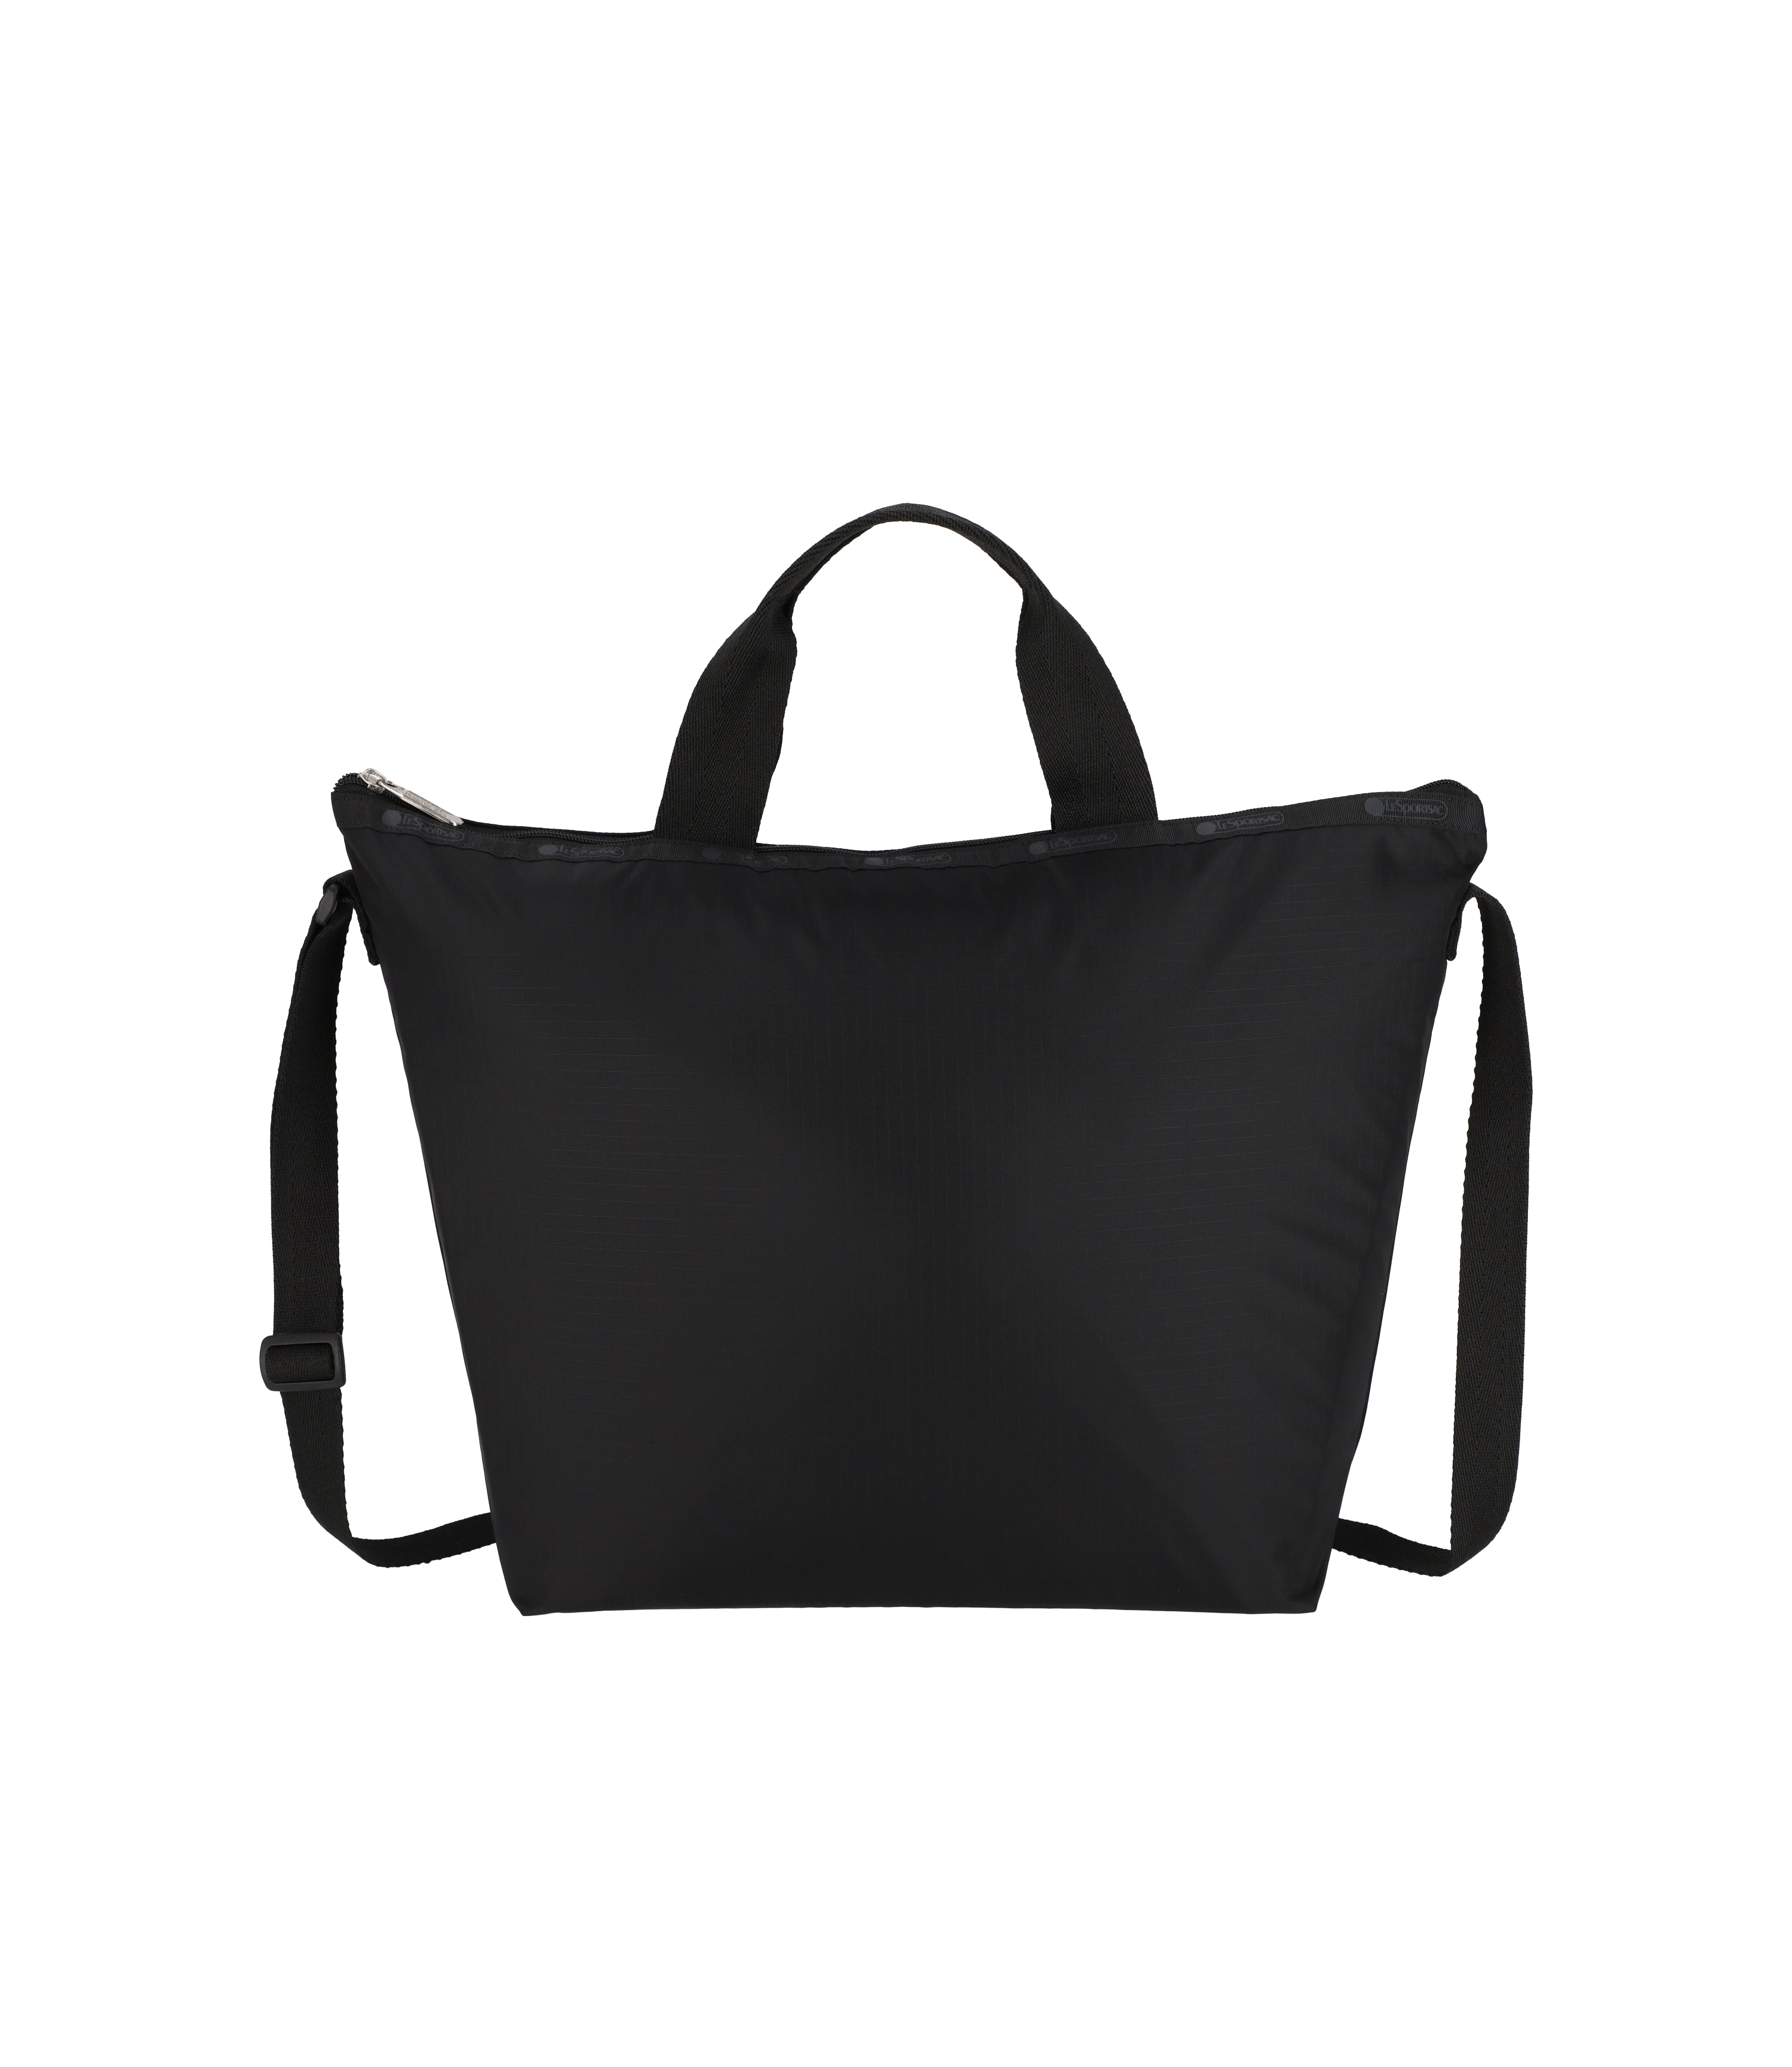 1 piece tweed black and white two-color plaid handbag simple